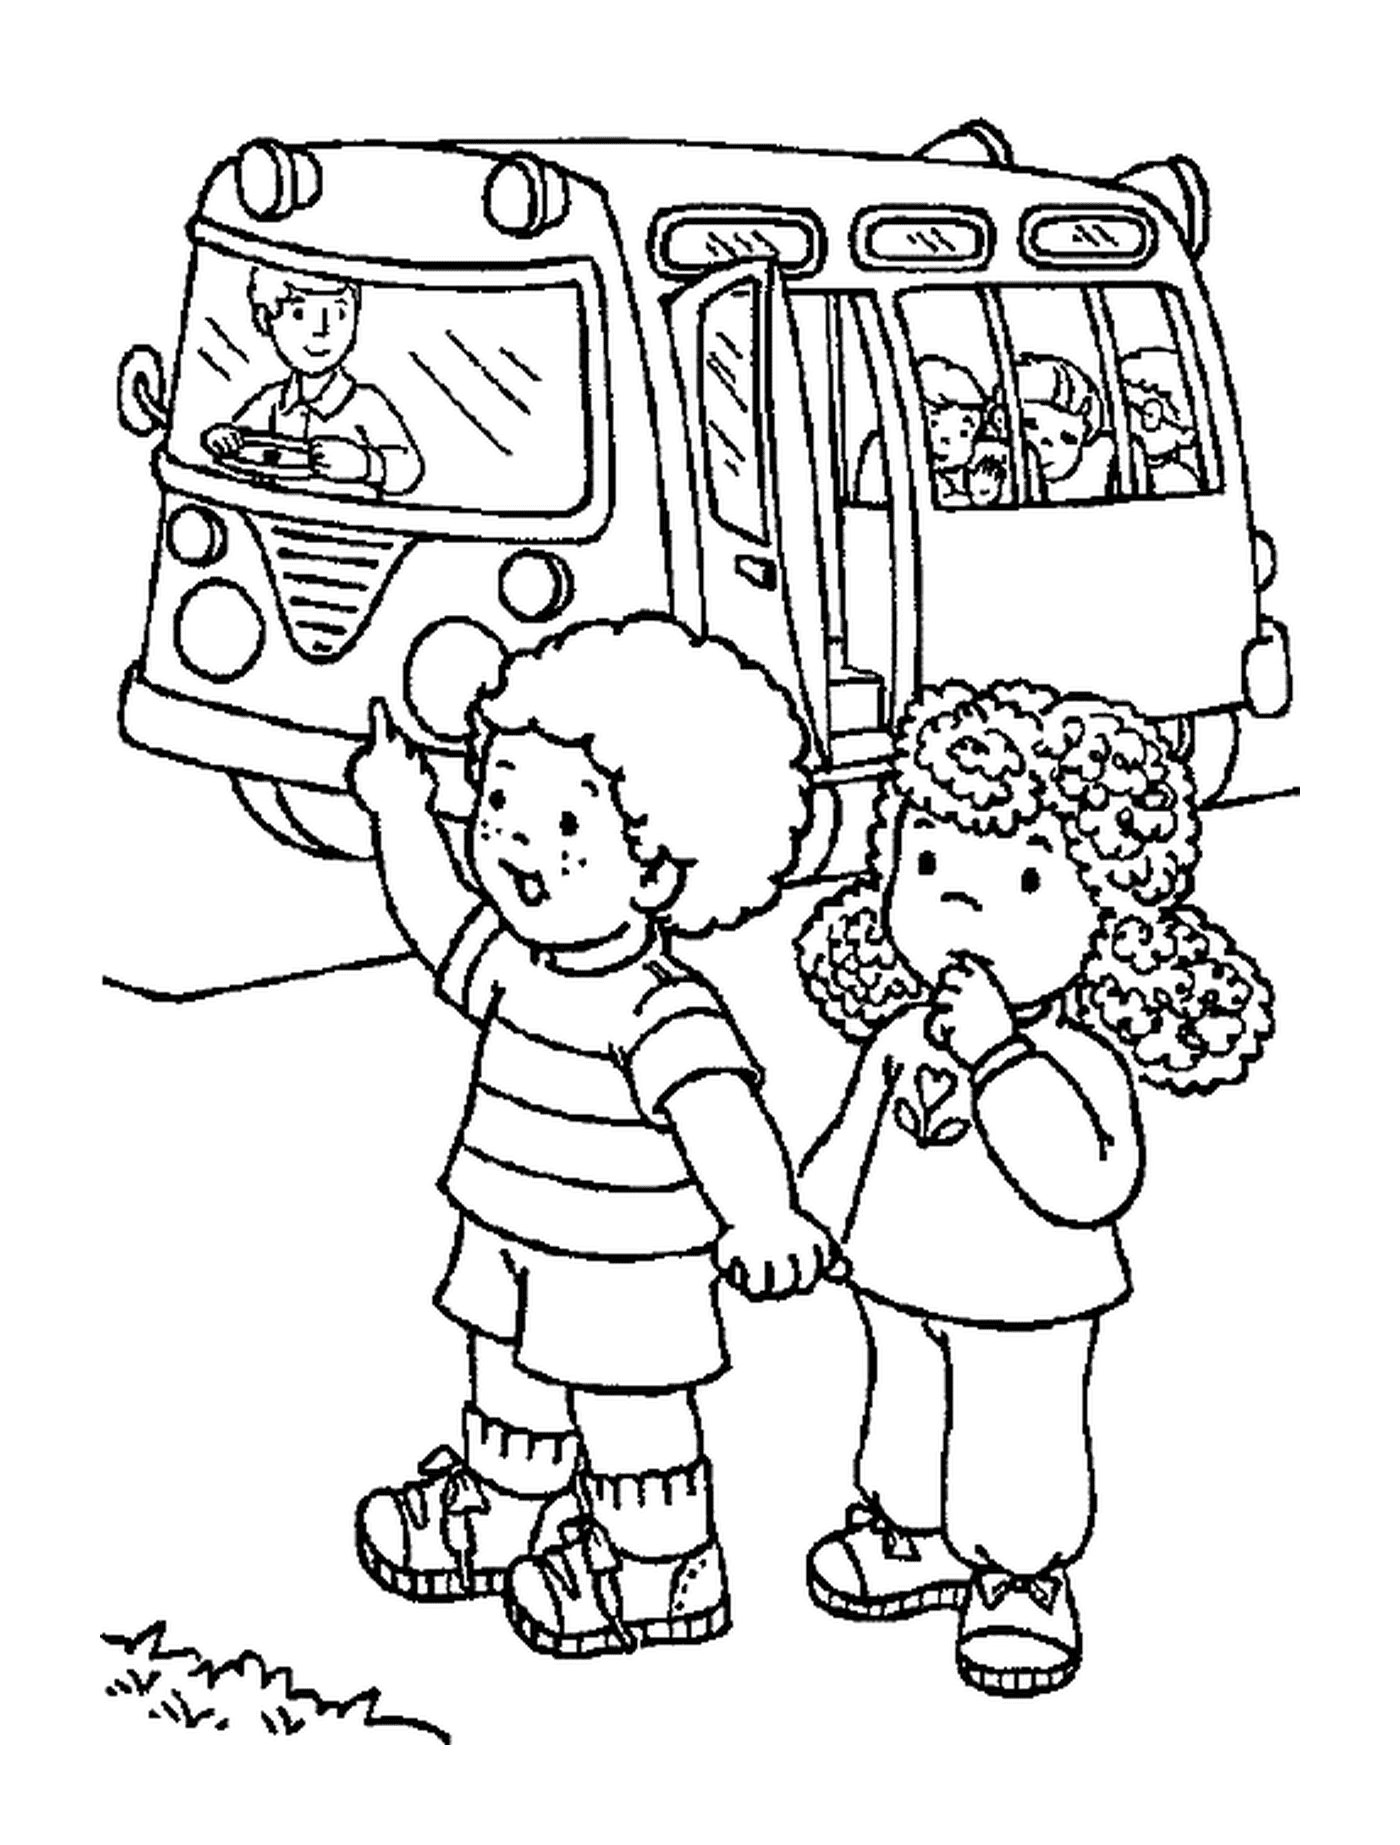  Two children return from school by school bus 